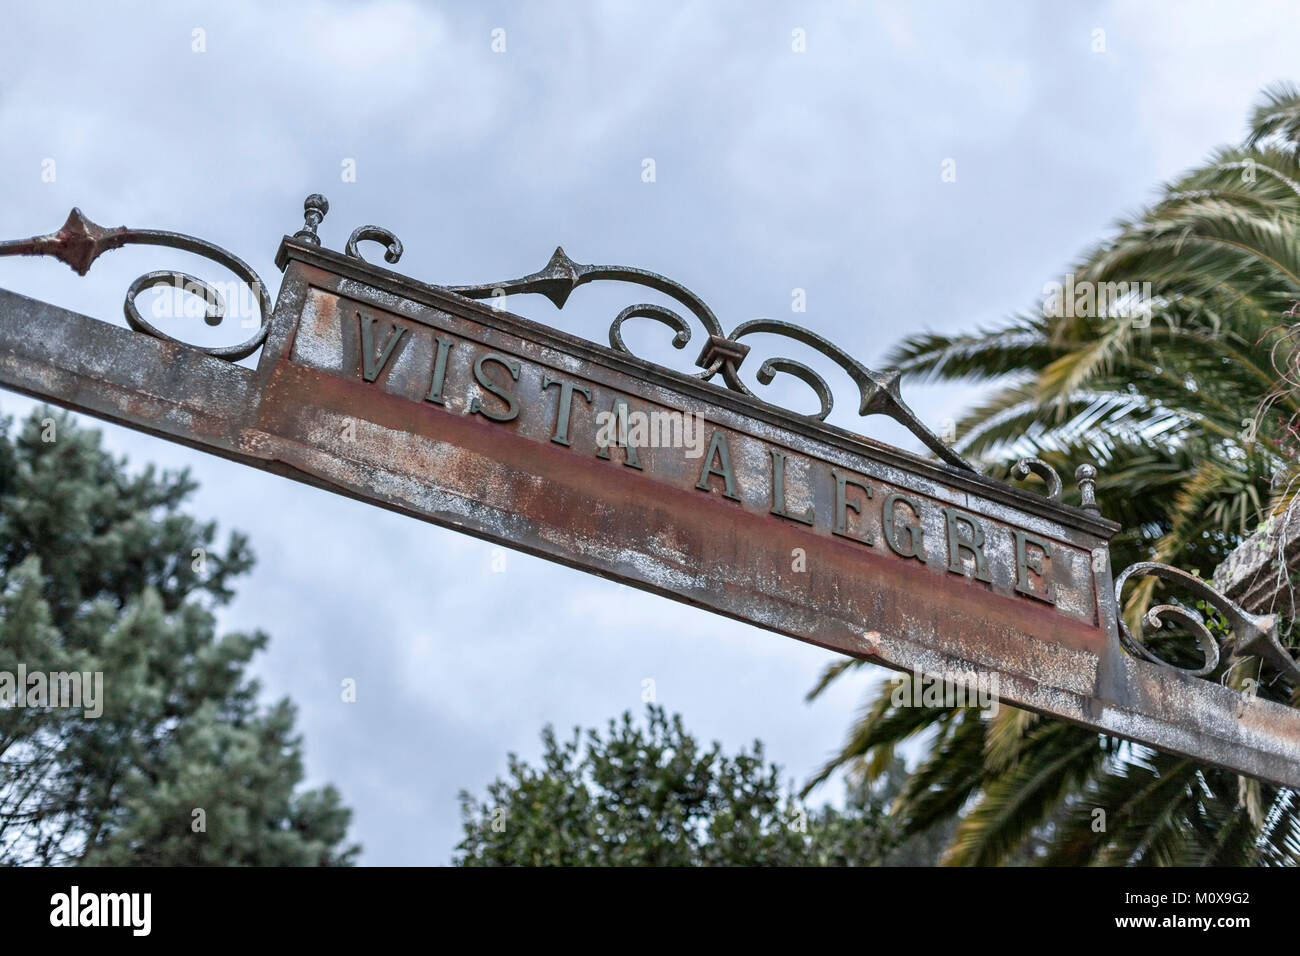 Old iron sign entrance to park ,parque vista alegre.Santiago de Compostela,Spain. Stock Photo